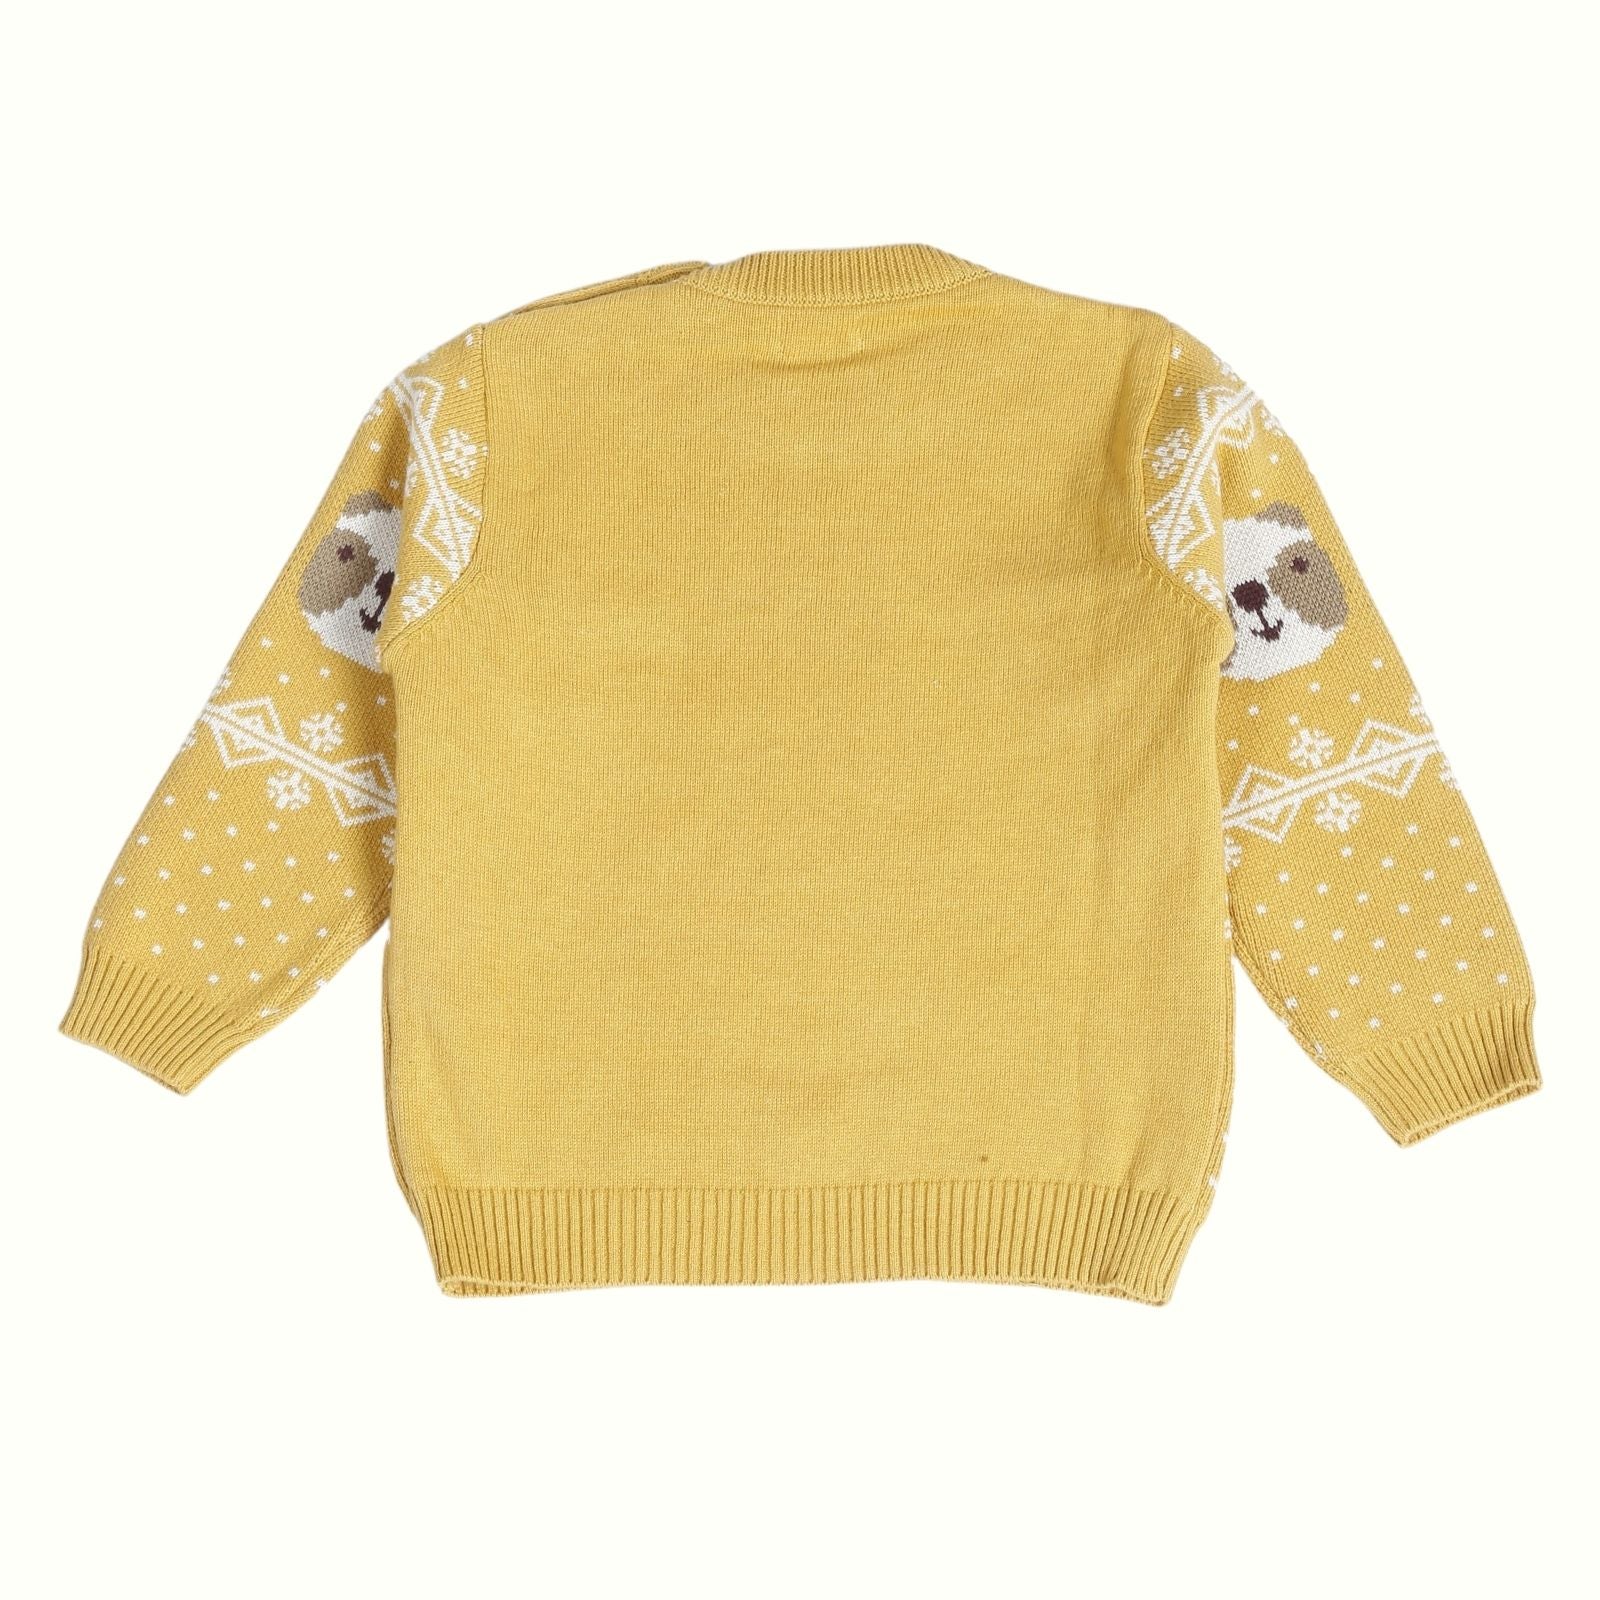 Greendeer Enchanting Bear & Cheerful Dog 100% Cotton Sweater Set of  2